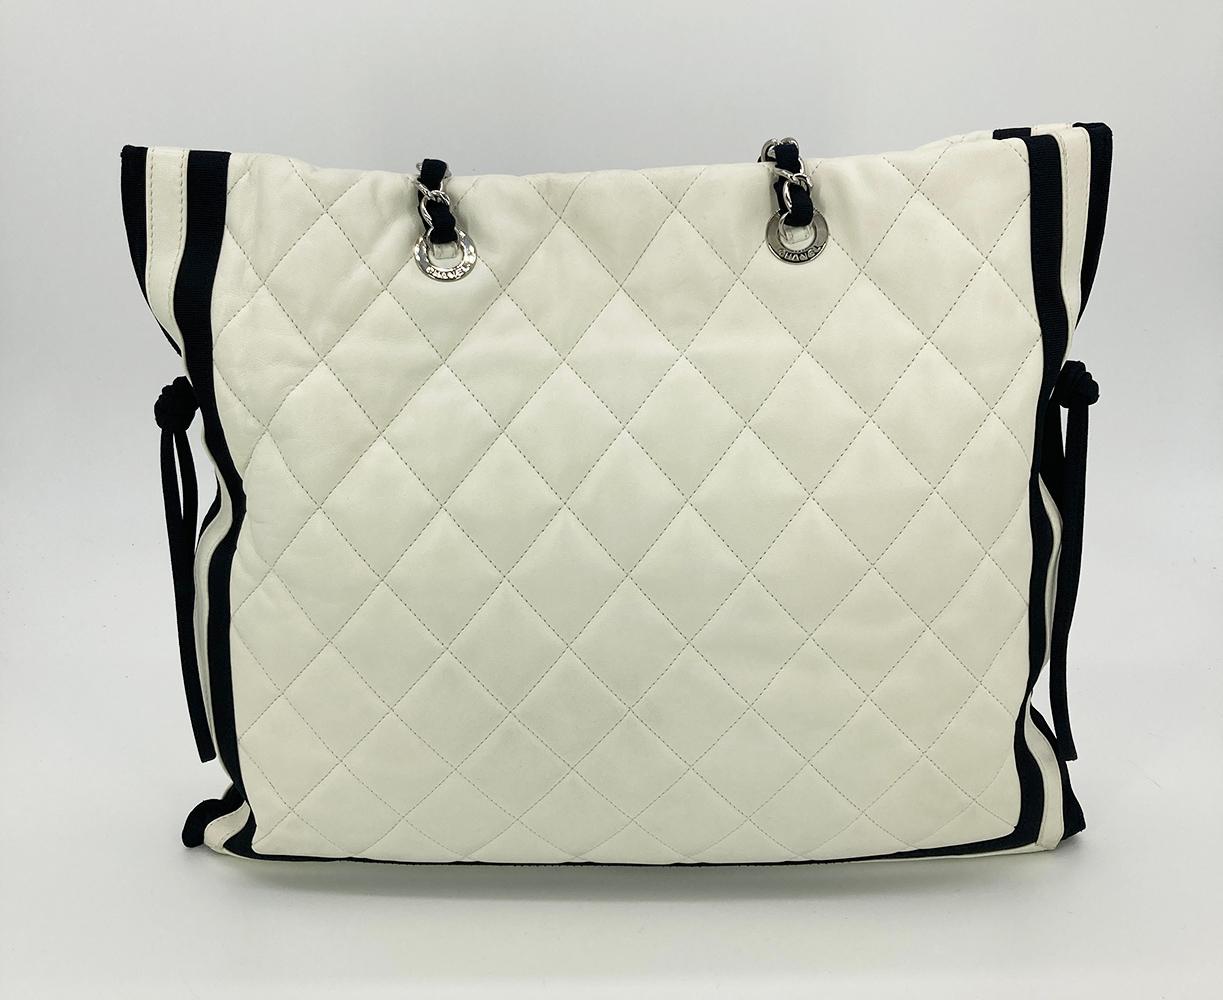 Chanel White Leather Black Grosgrain Quilted CC Shoulder Bag Tote 1